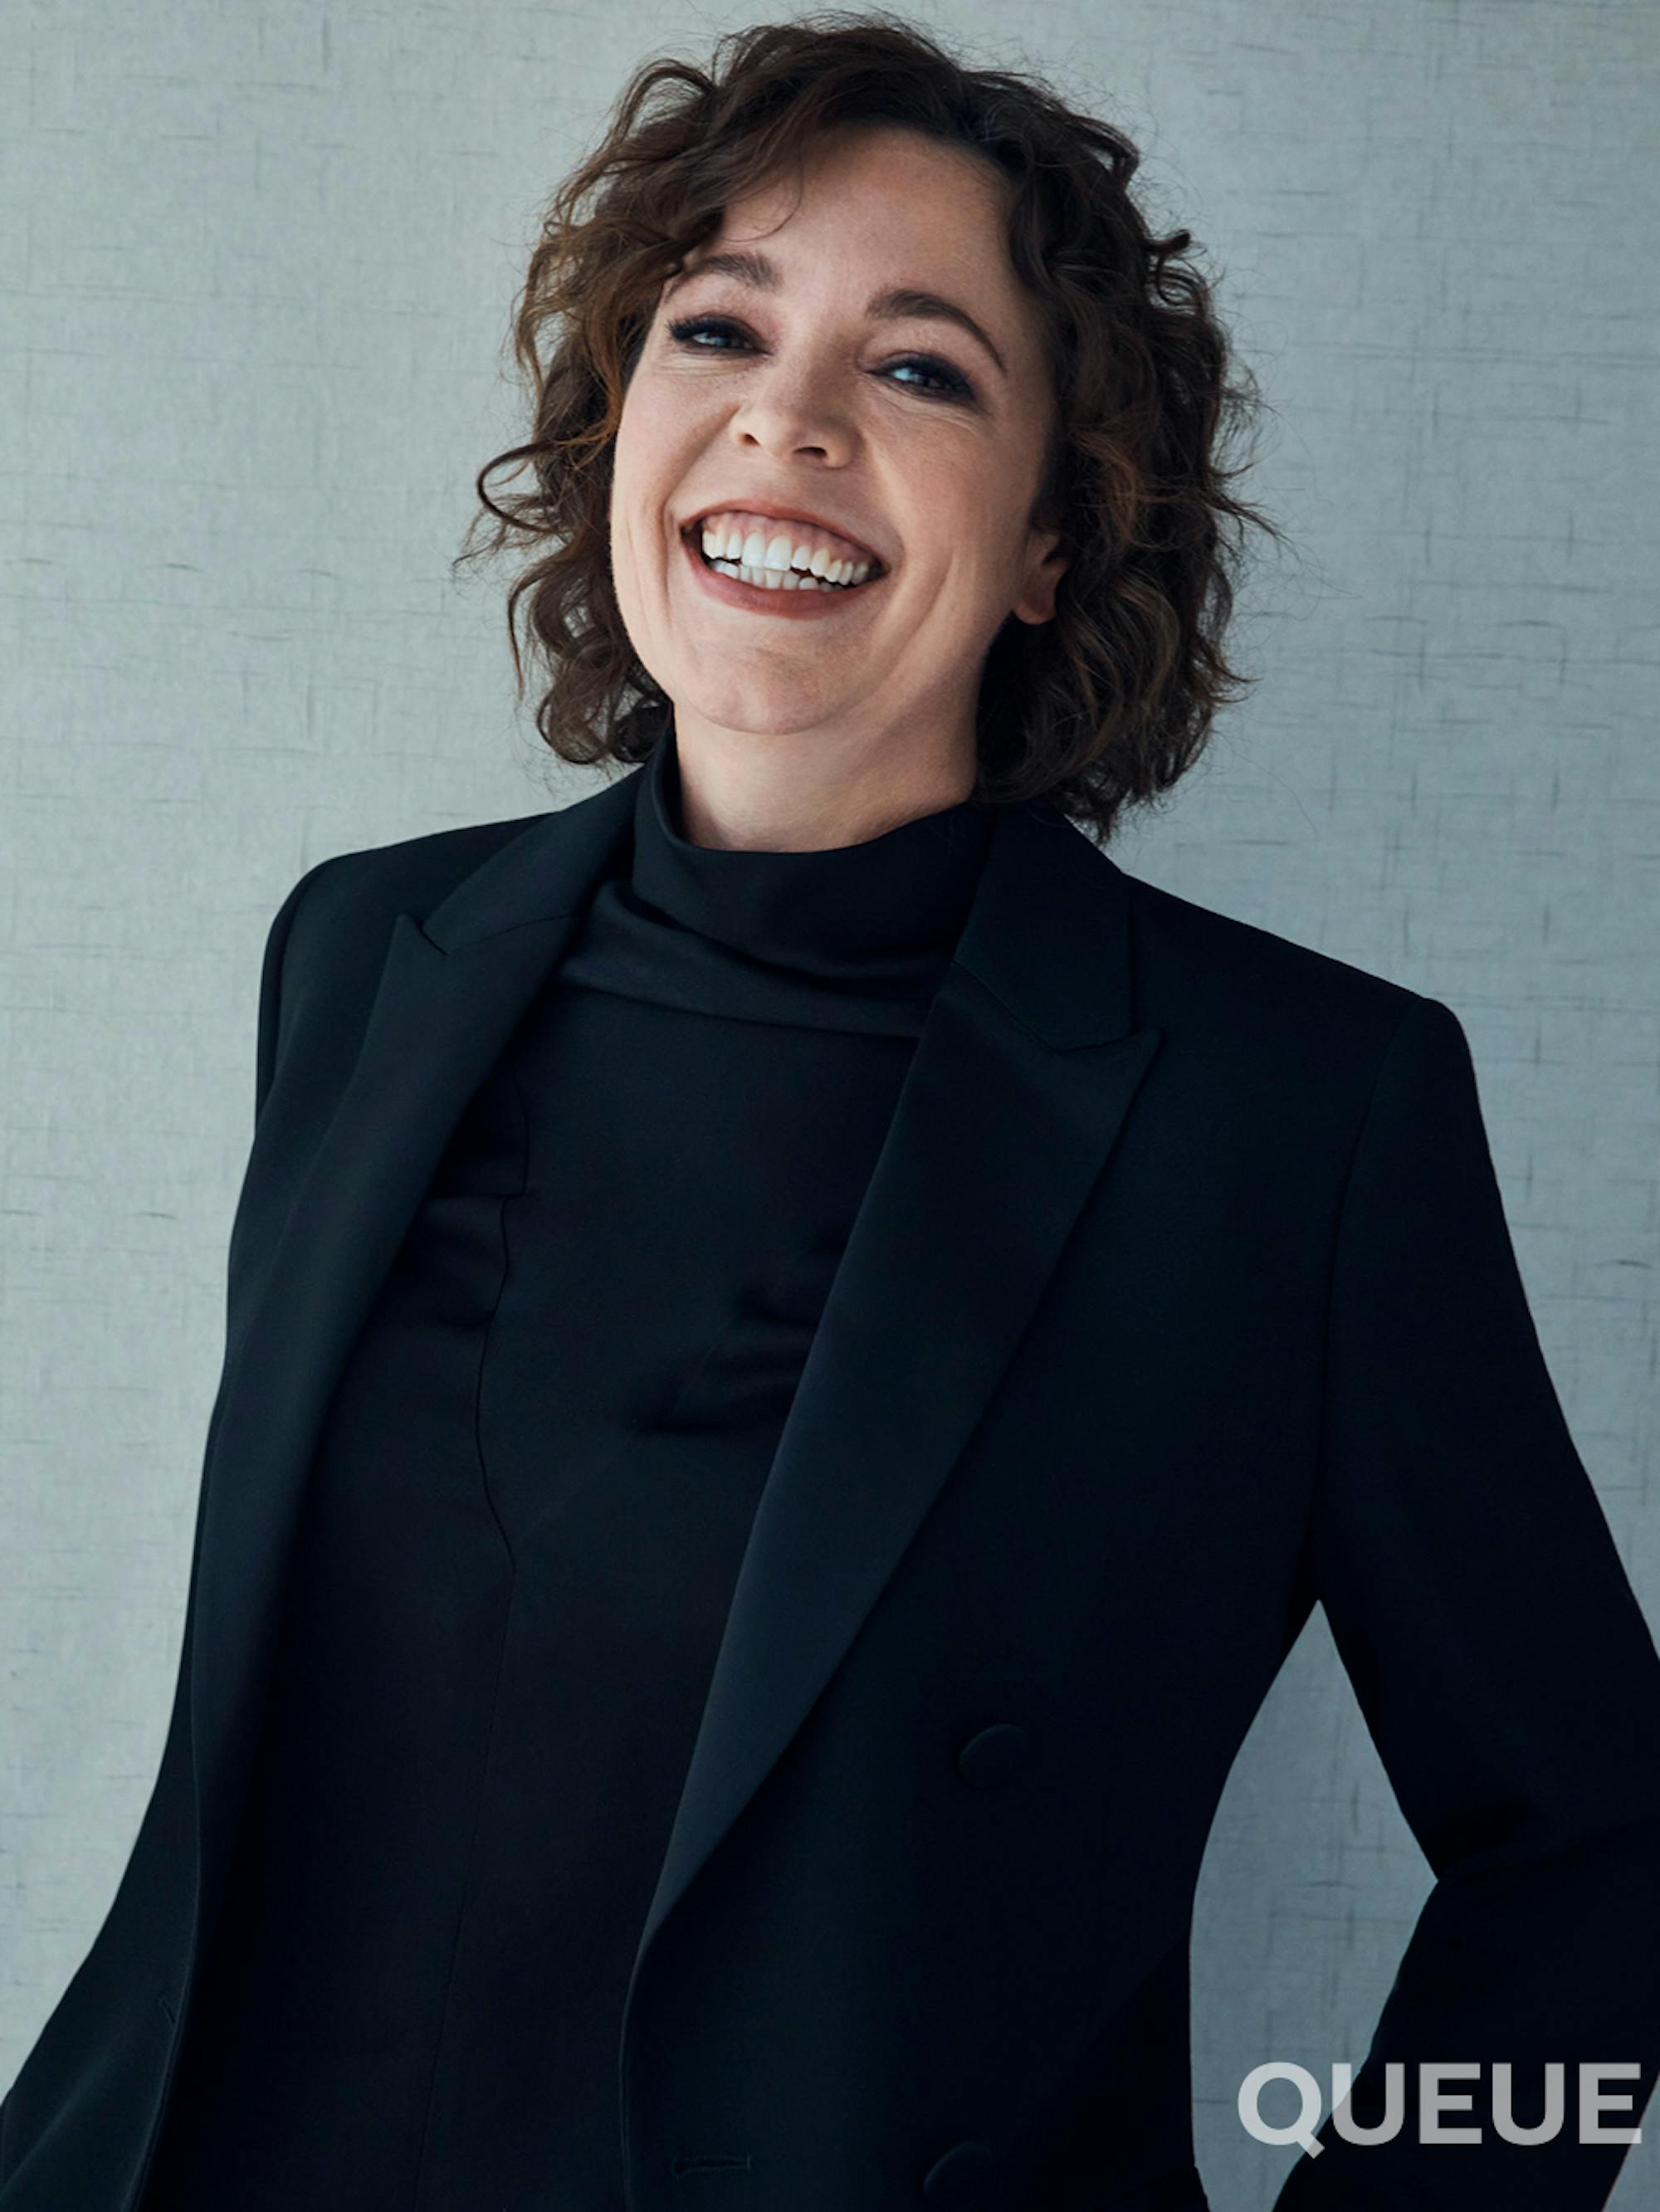  Olivia Colman wears a dark blazer and turtleneck as she smiles wide.